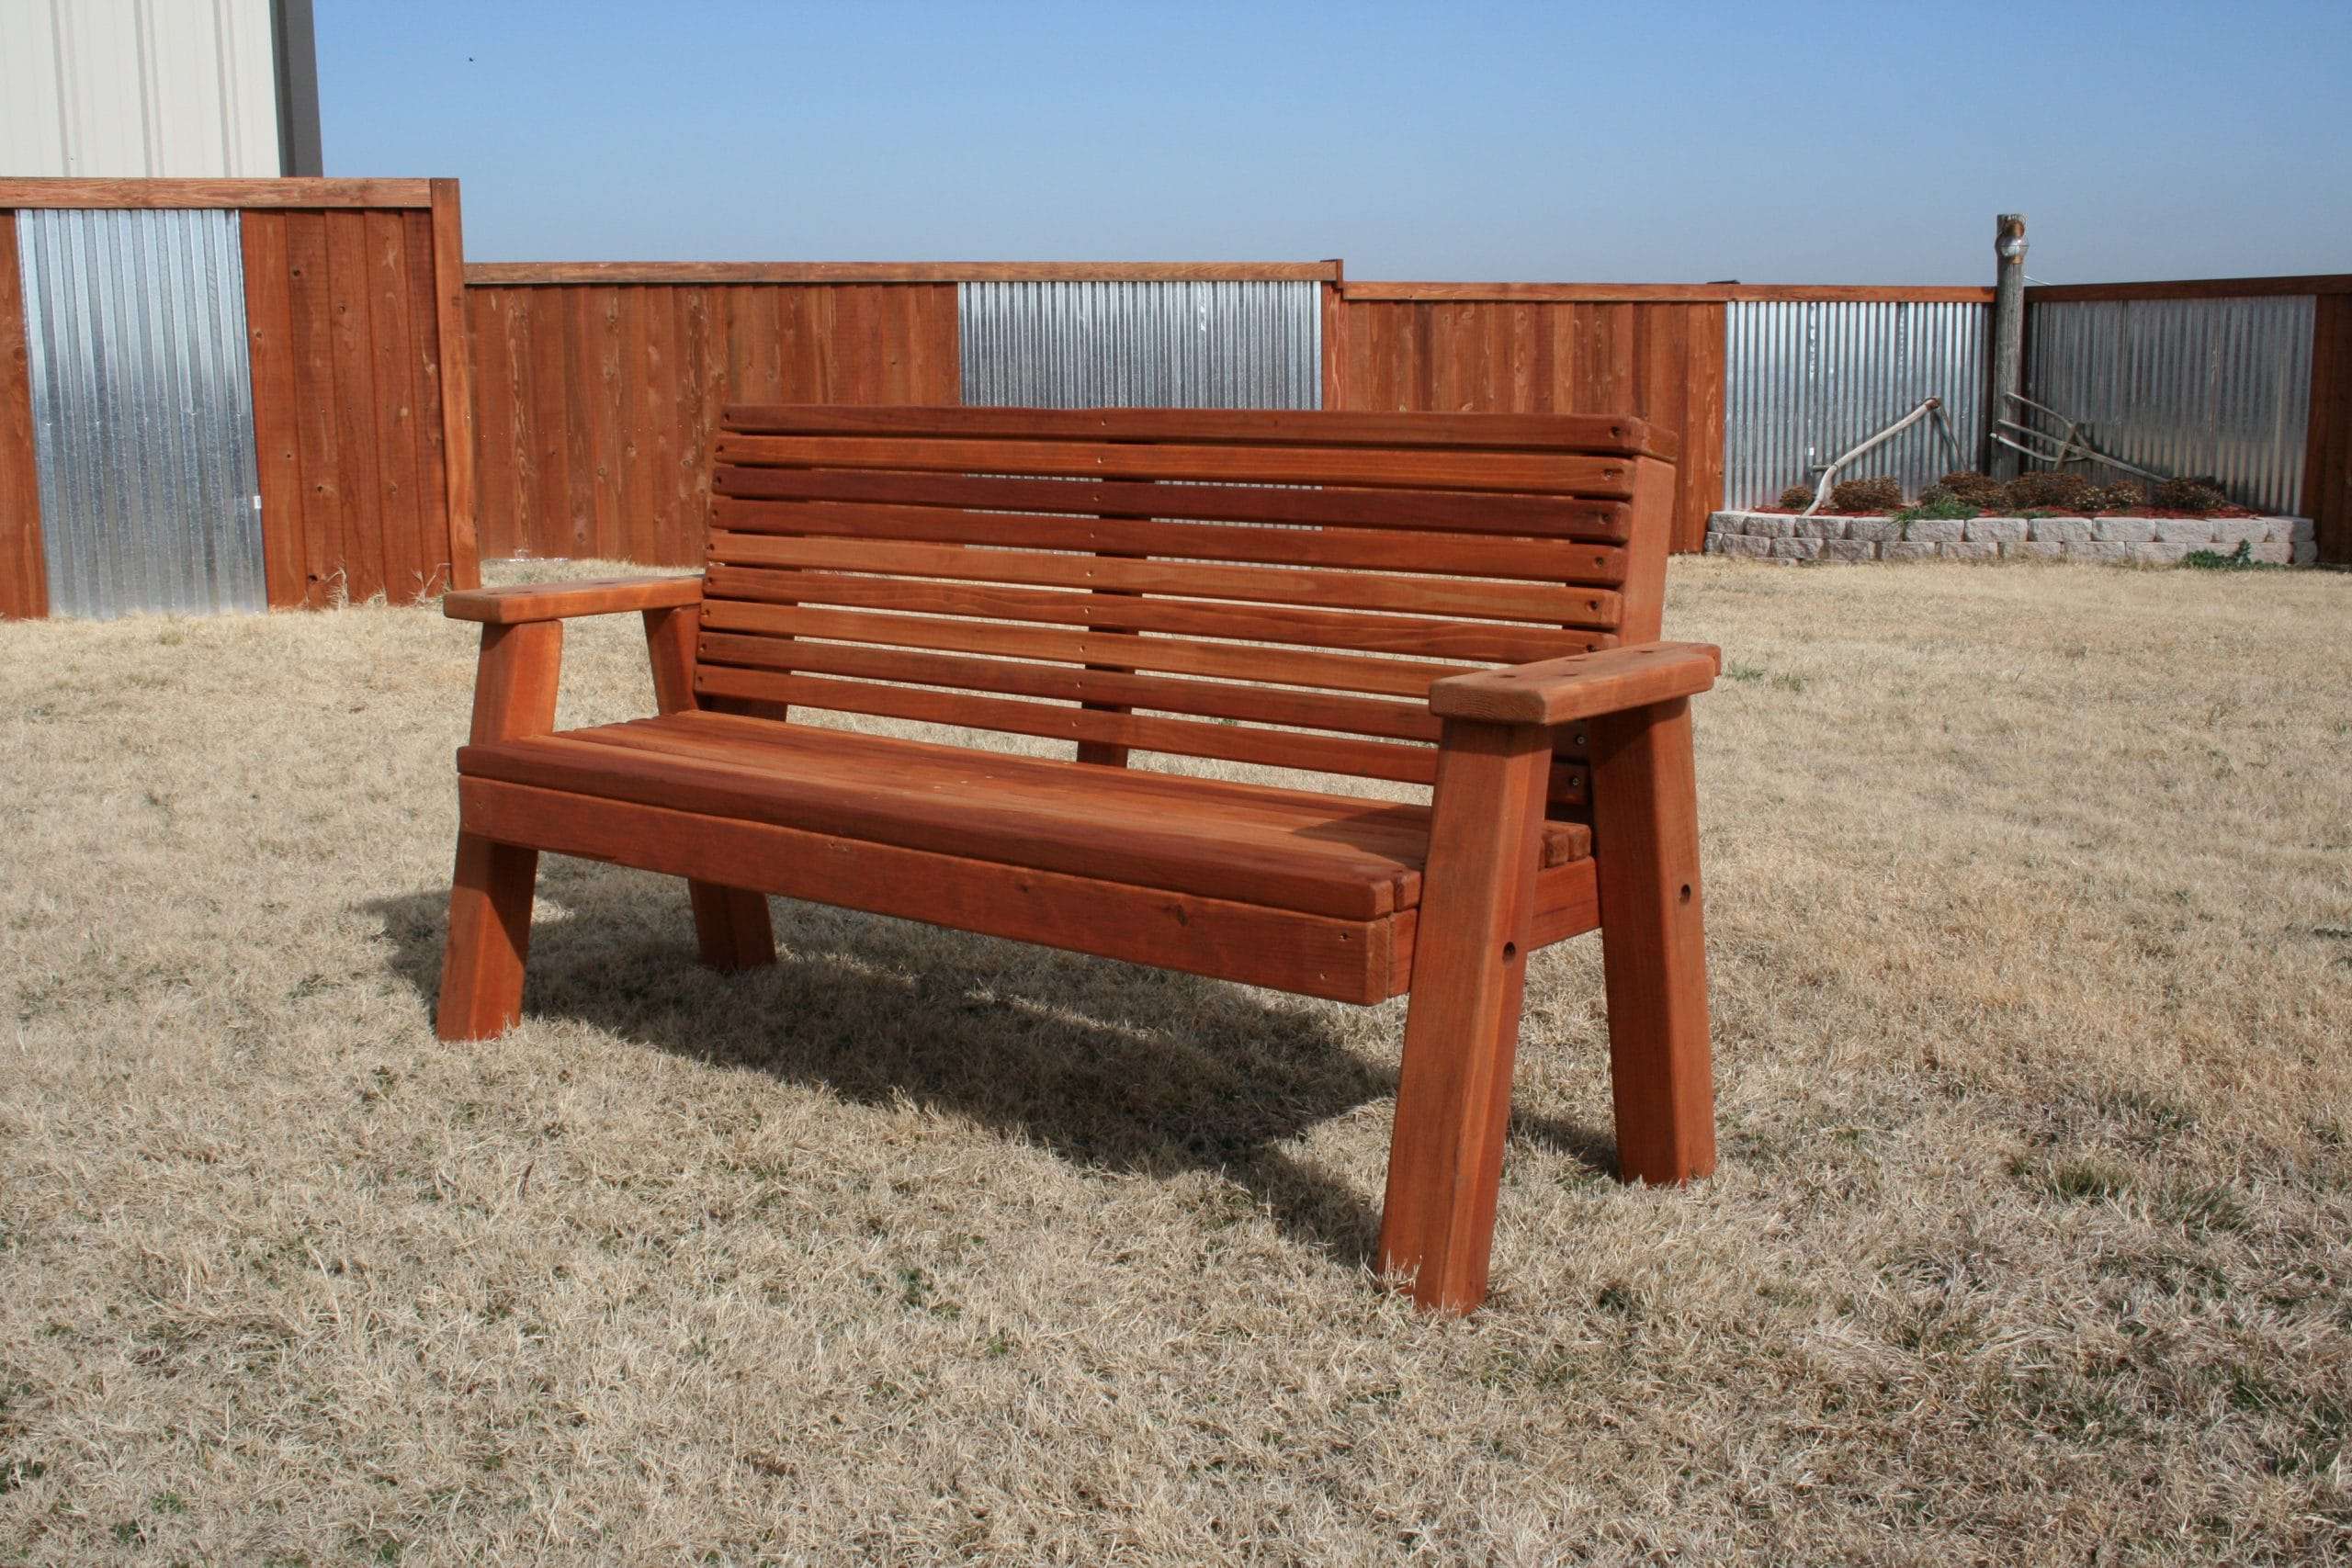 five foot redwood park bench shown in yard